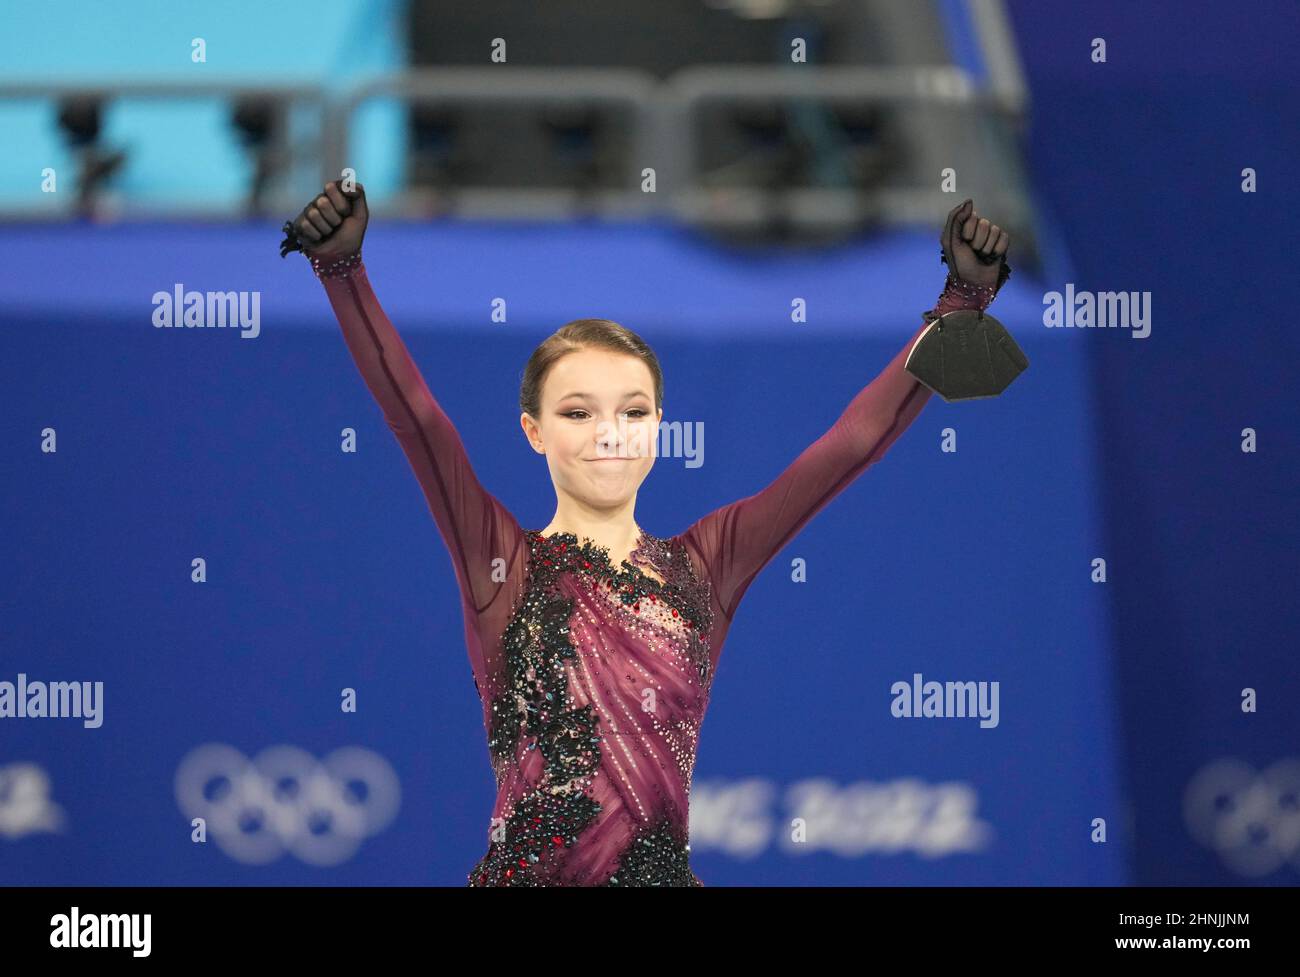 Beijing, China, 2022 Winter Olympics, February 17, 2022: Anna Shcherbakova from Russia winning the gold medal in Figure Skating at Capital Indoor Stadium. Kim Price/CSM. Stock Photo